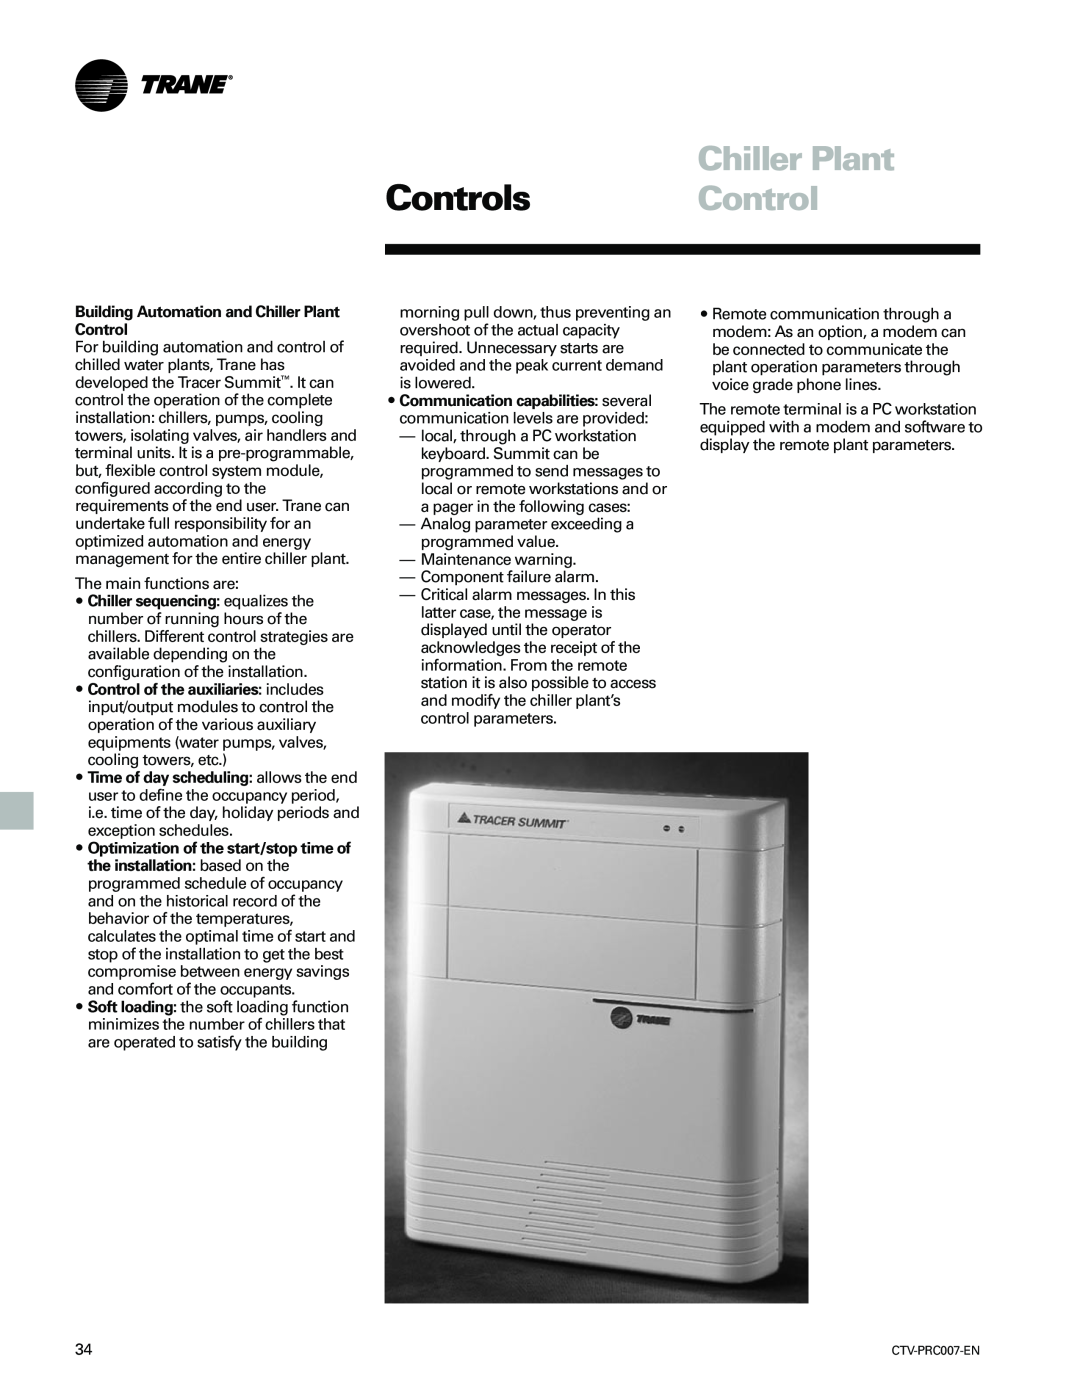 Trane ctv-prc007-en manual Controls Control, Building Automation and Chiller Plant Control 